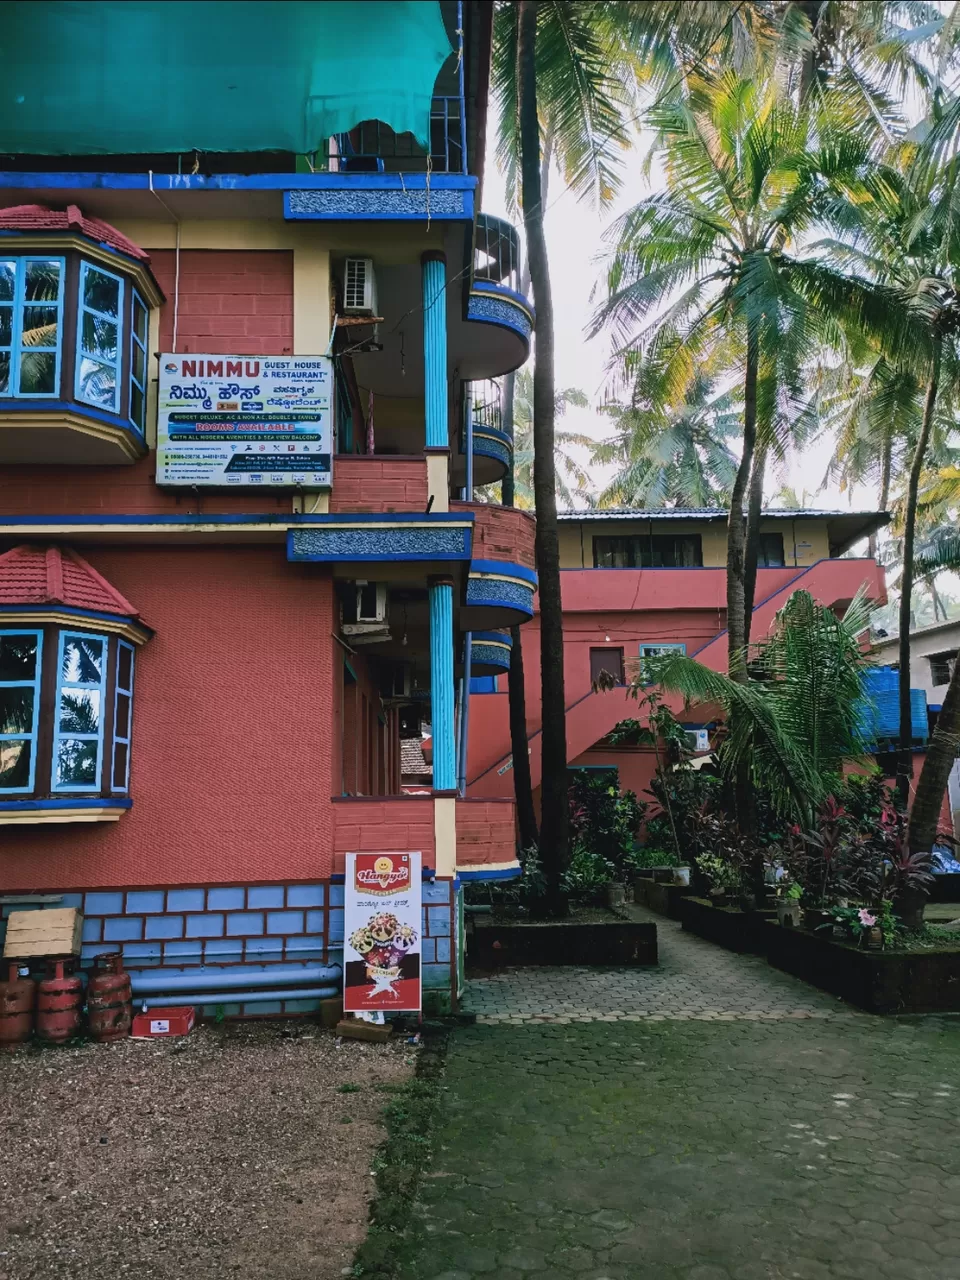 Photo of Nimmu House, Dandebagh, Gokarna, Karnataka, India by Kapil Bhardwaj